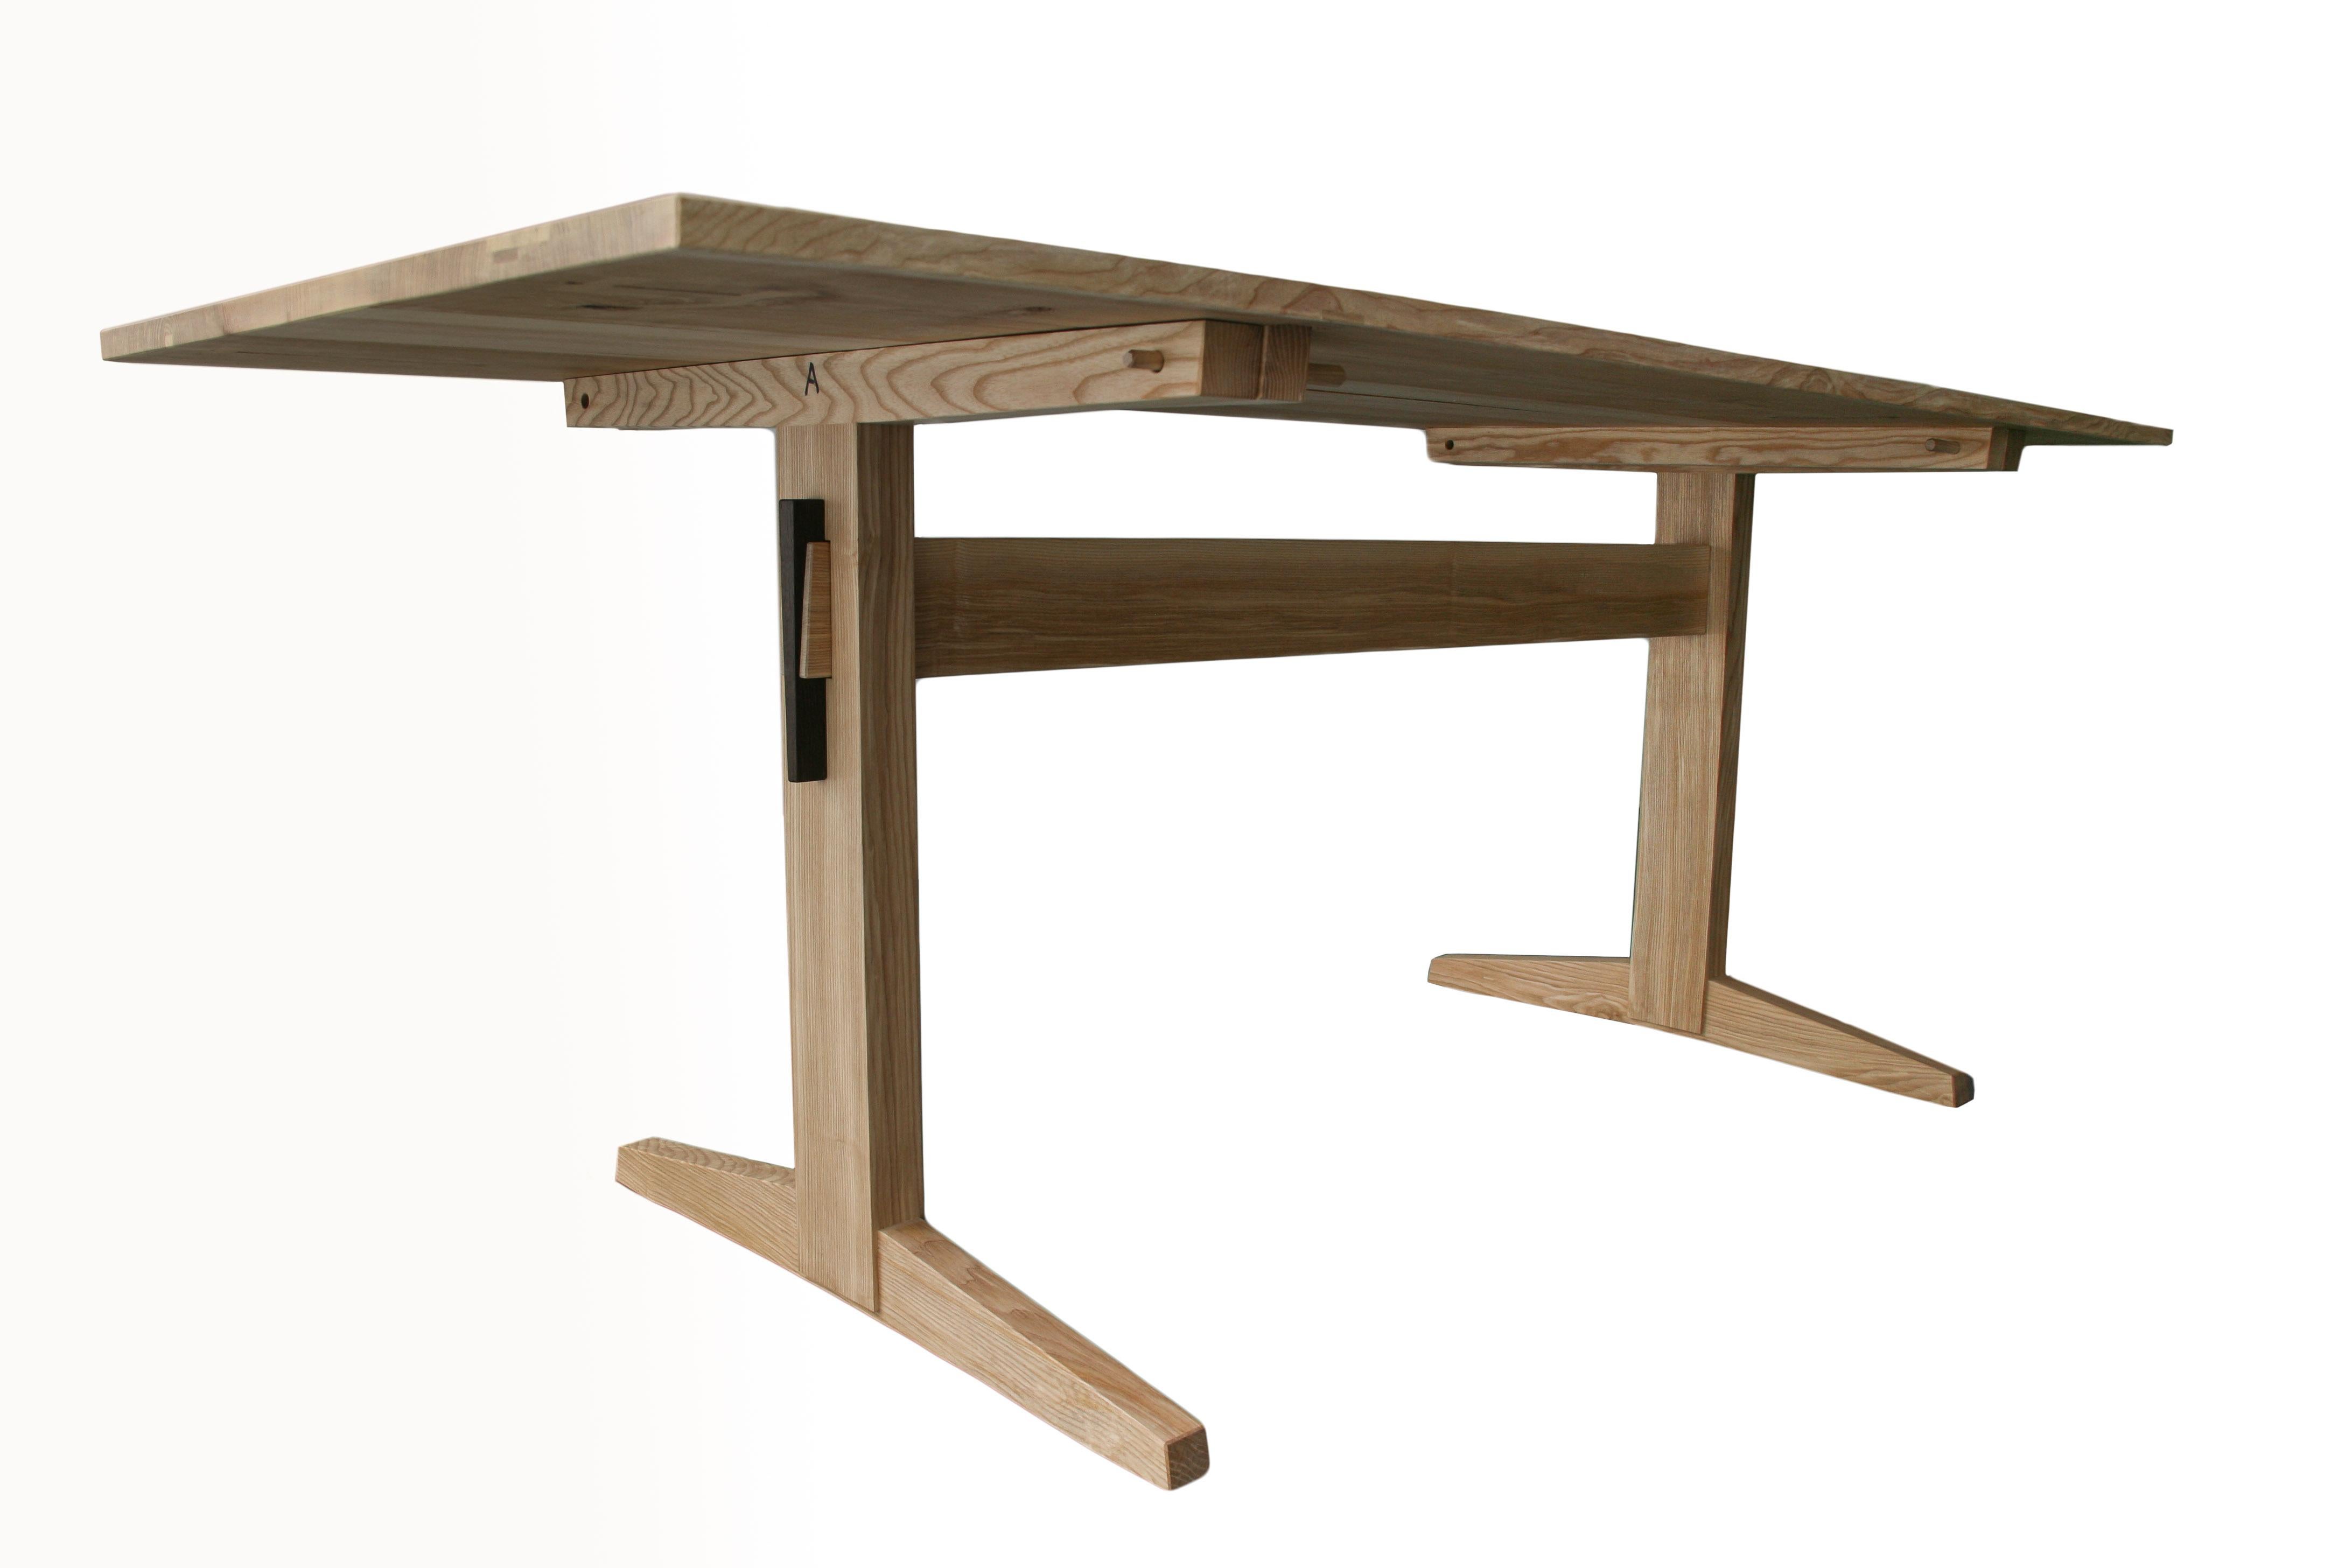 Scandinavian Modern 'M' Table - George Nakashima inspired Ash Trestle Table